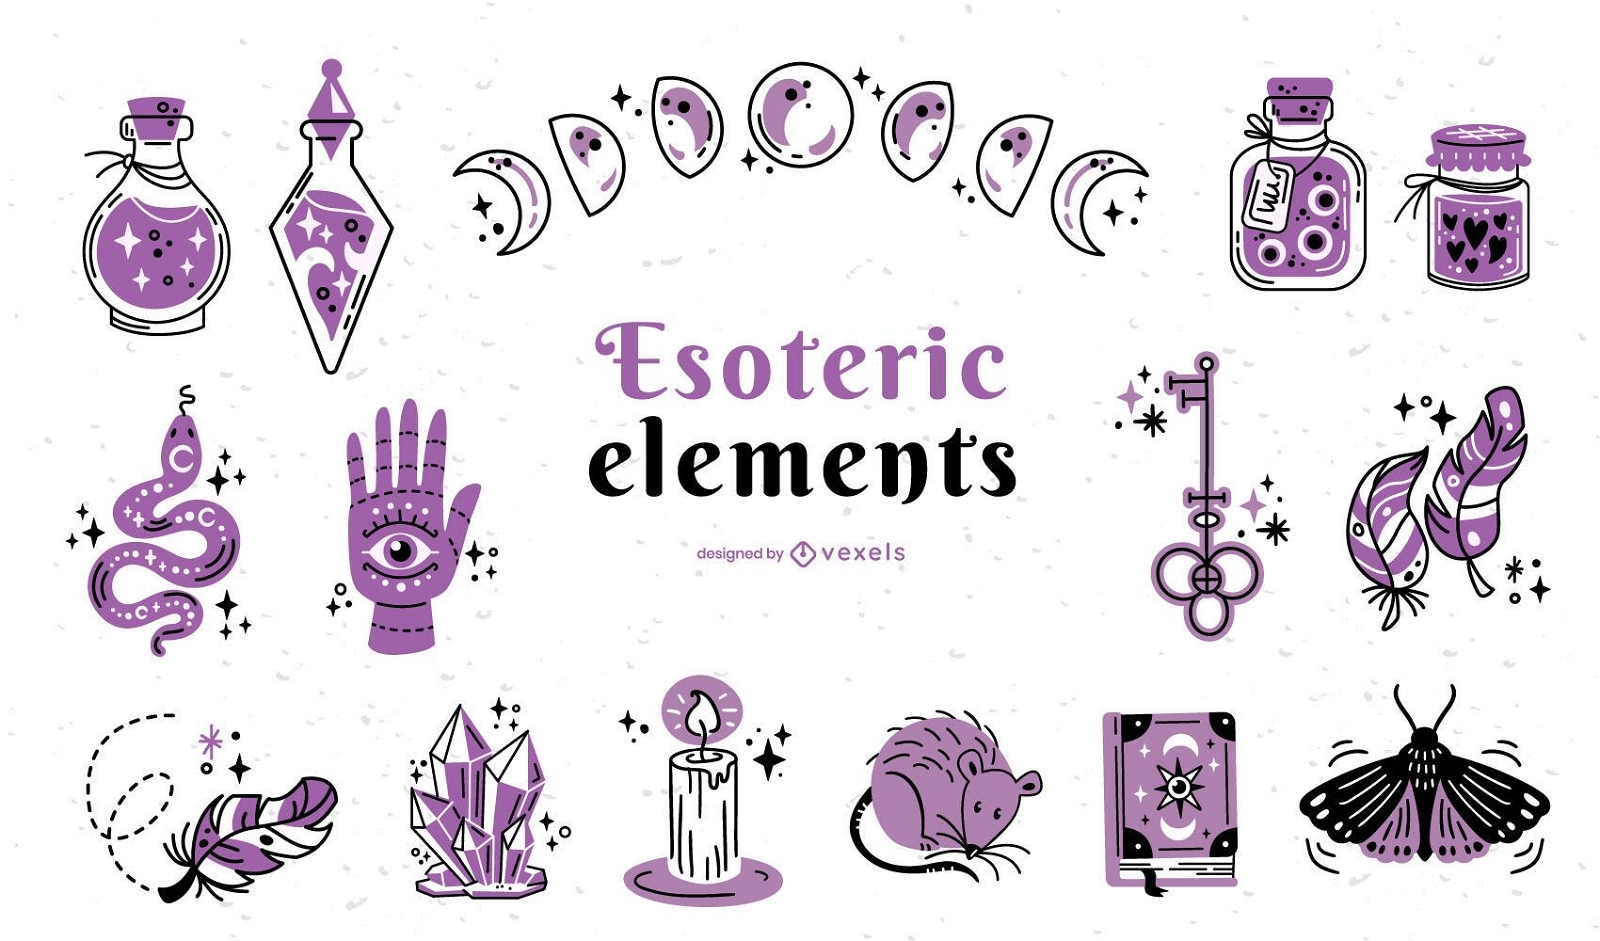 Esoteric elements color-stroke